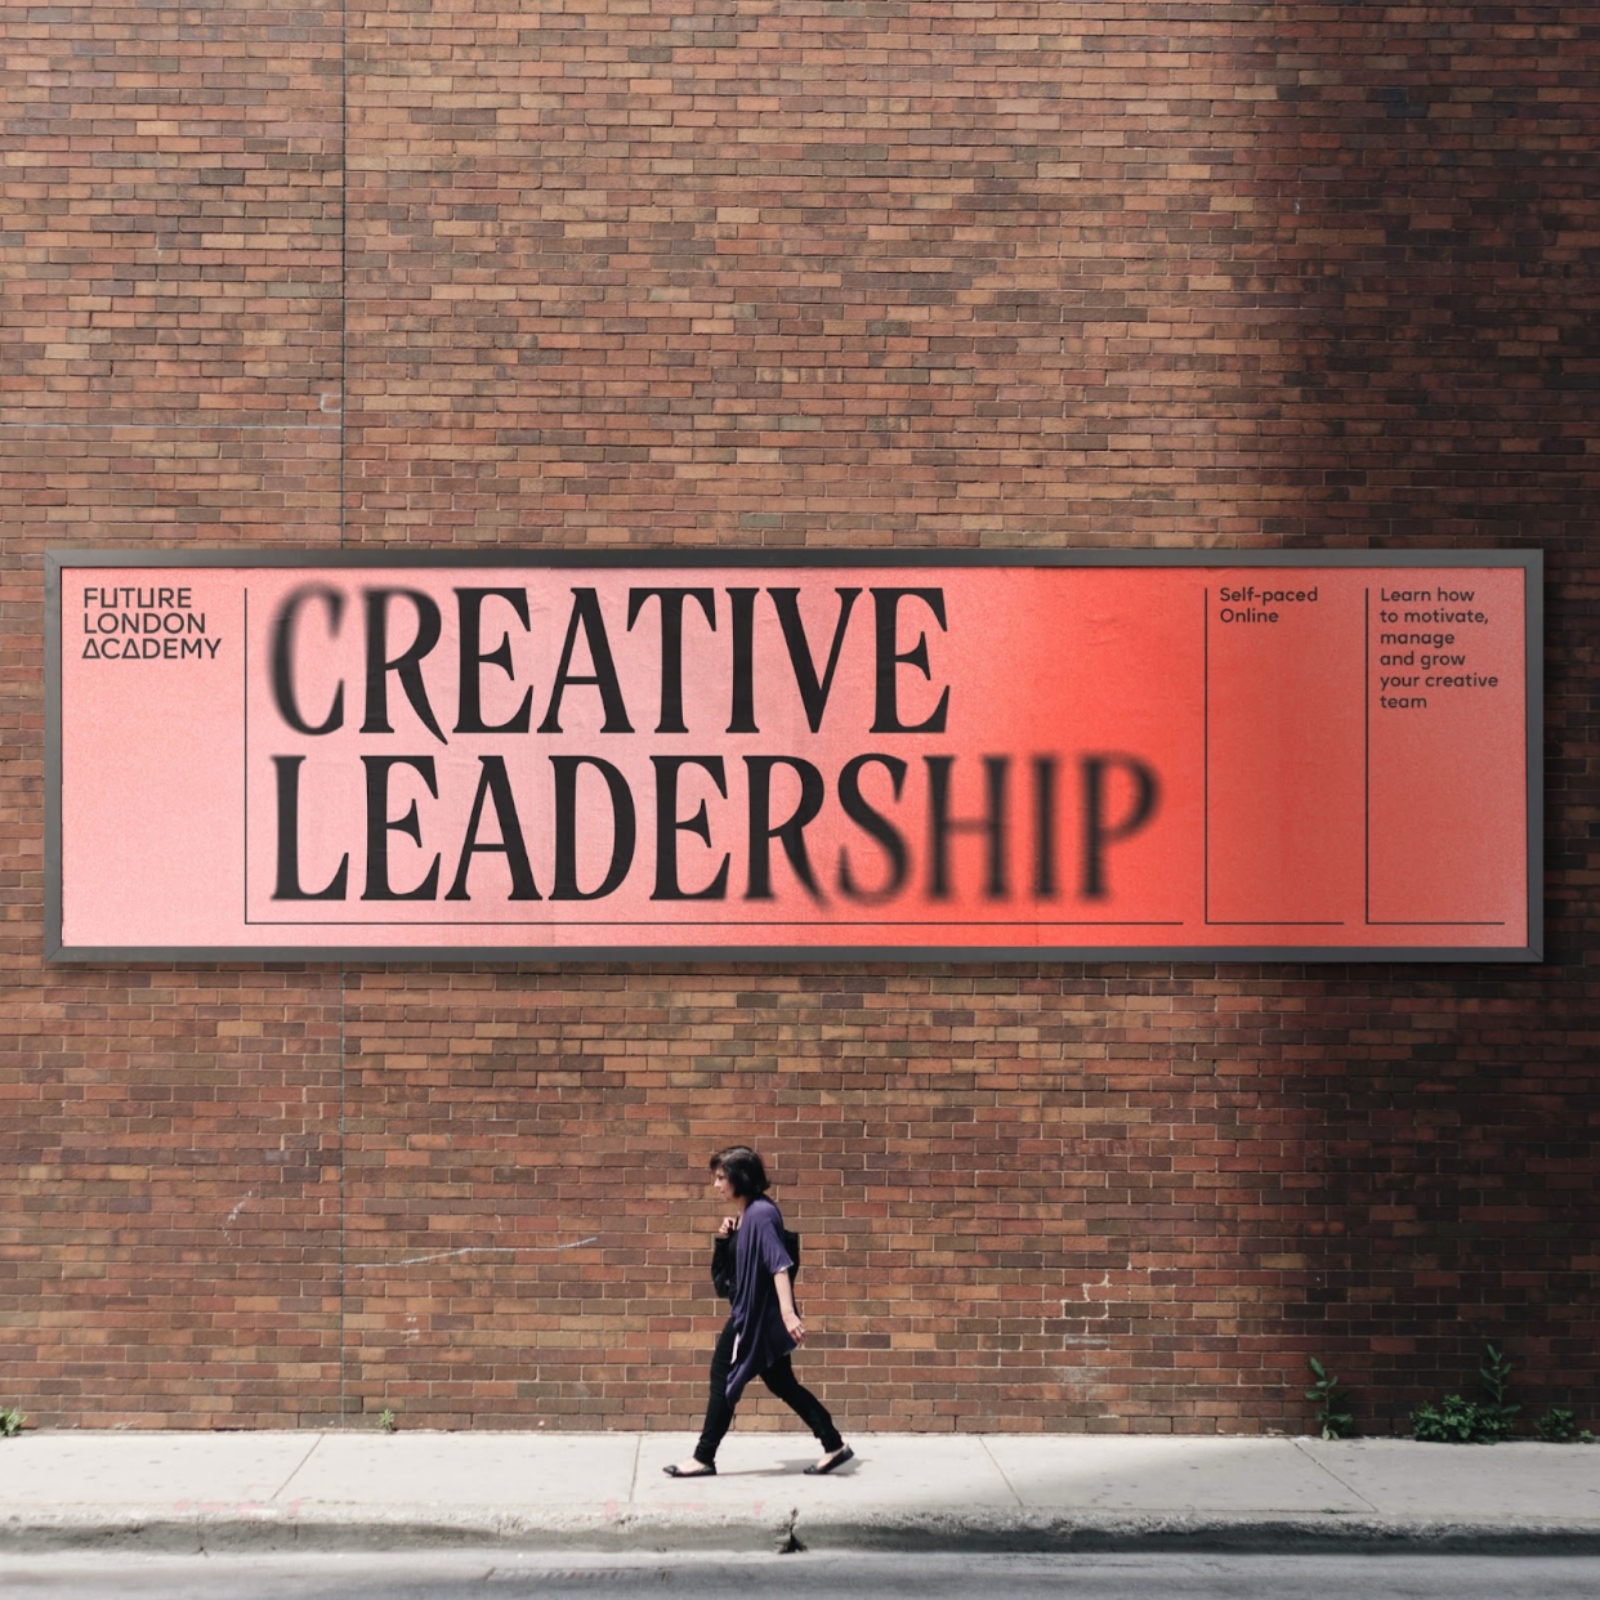 Future London Academys identity for Creative Leadership